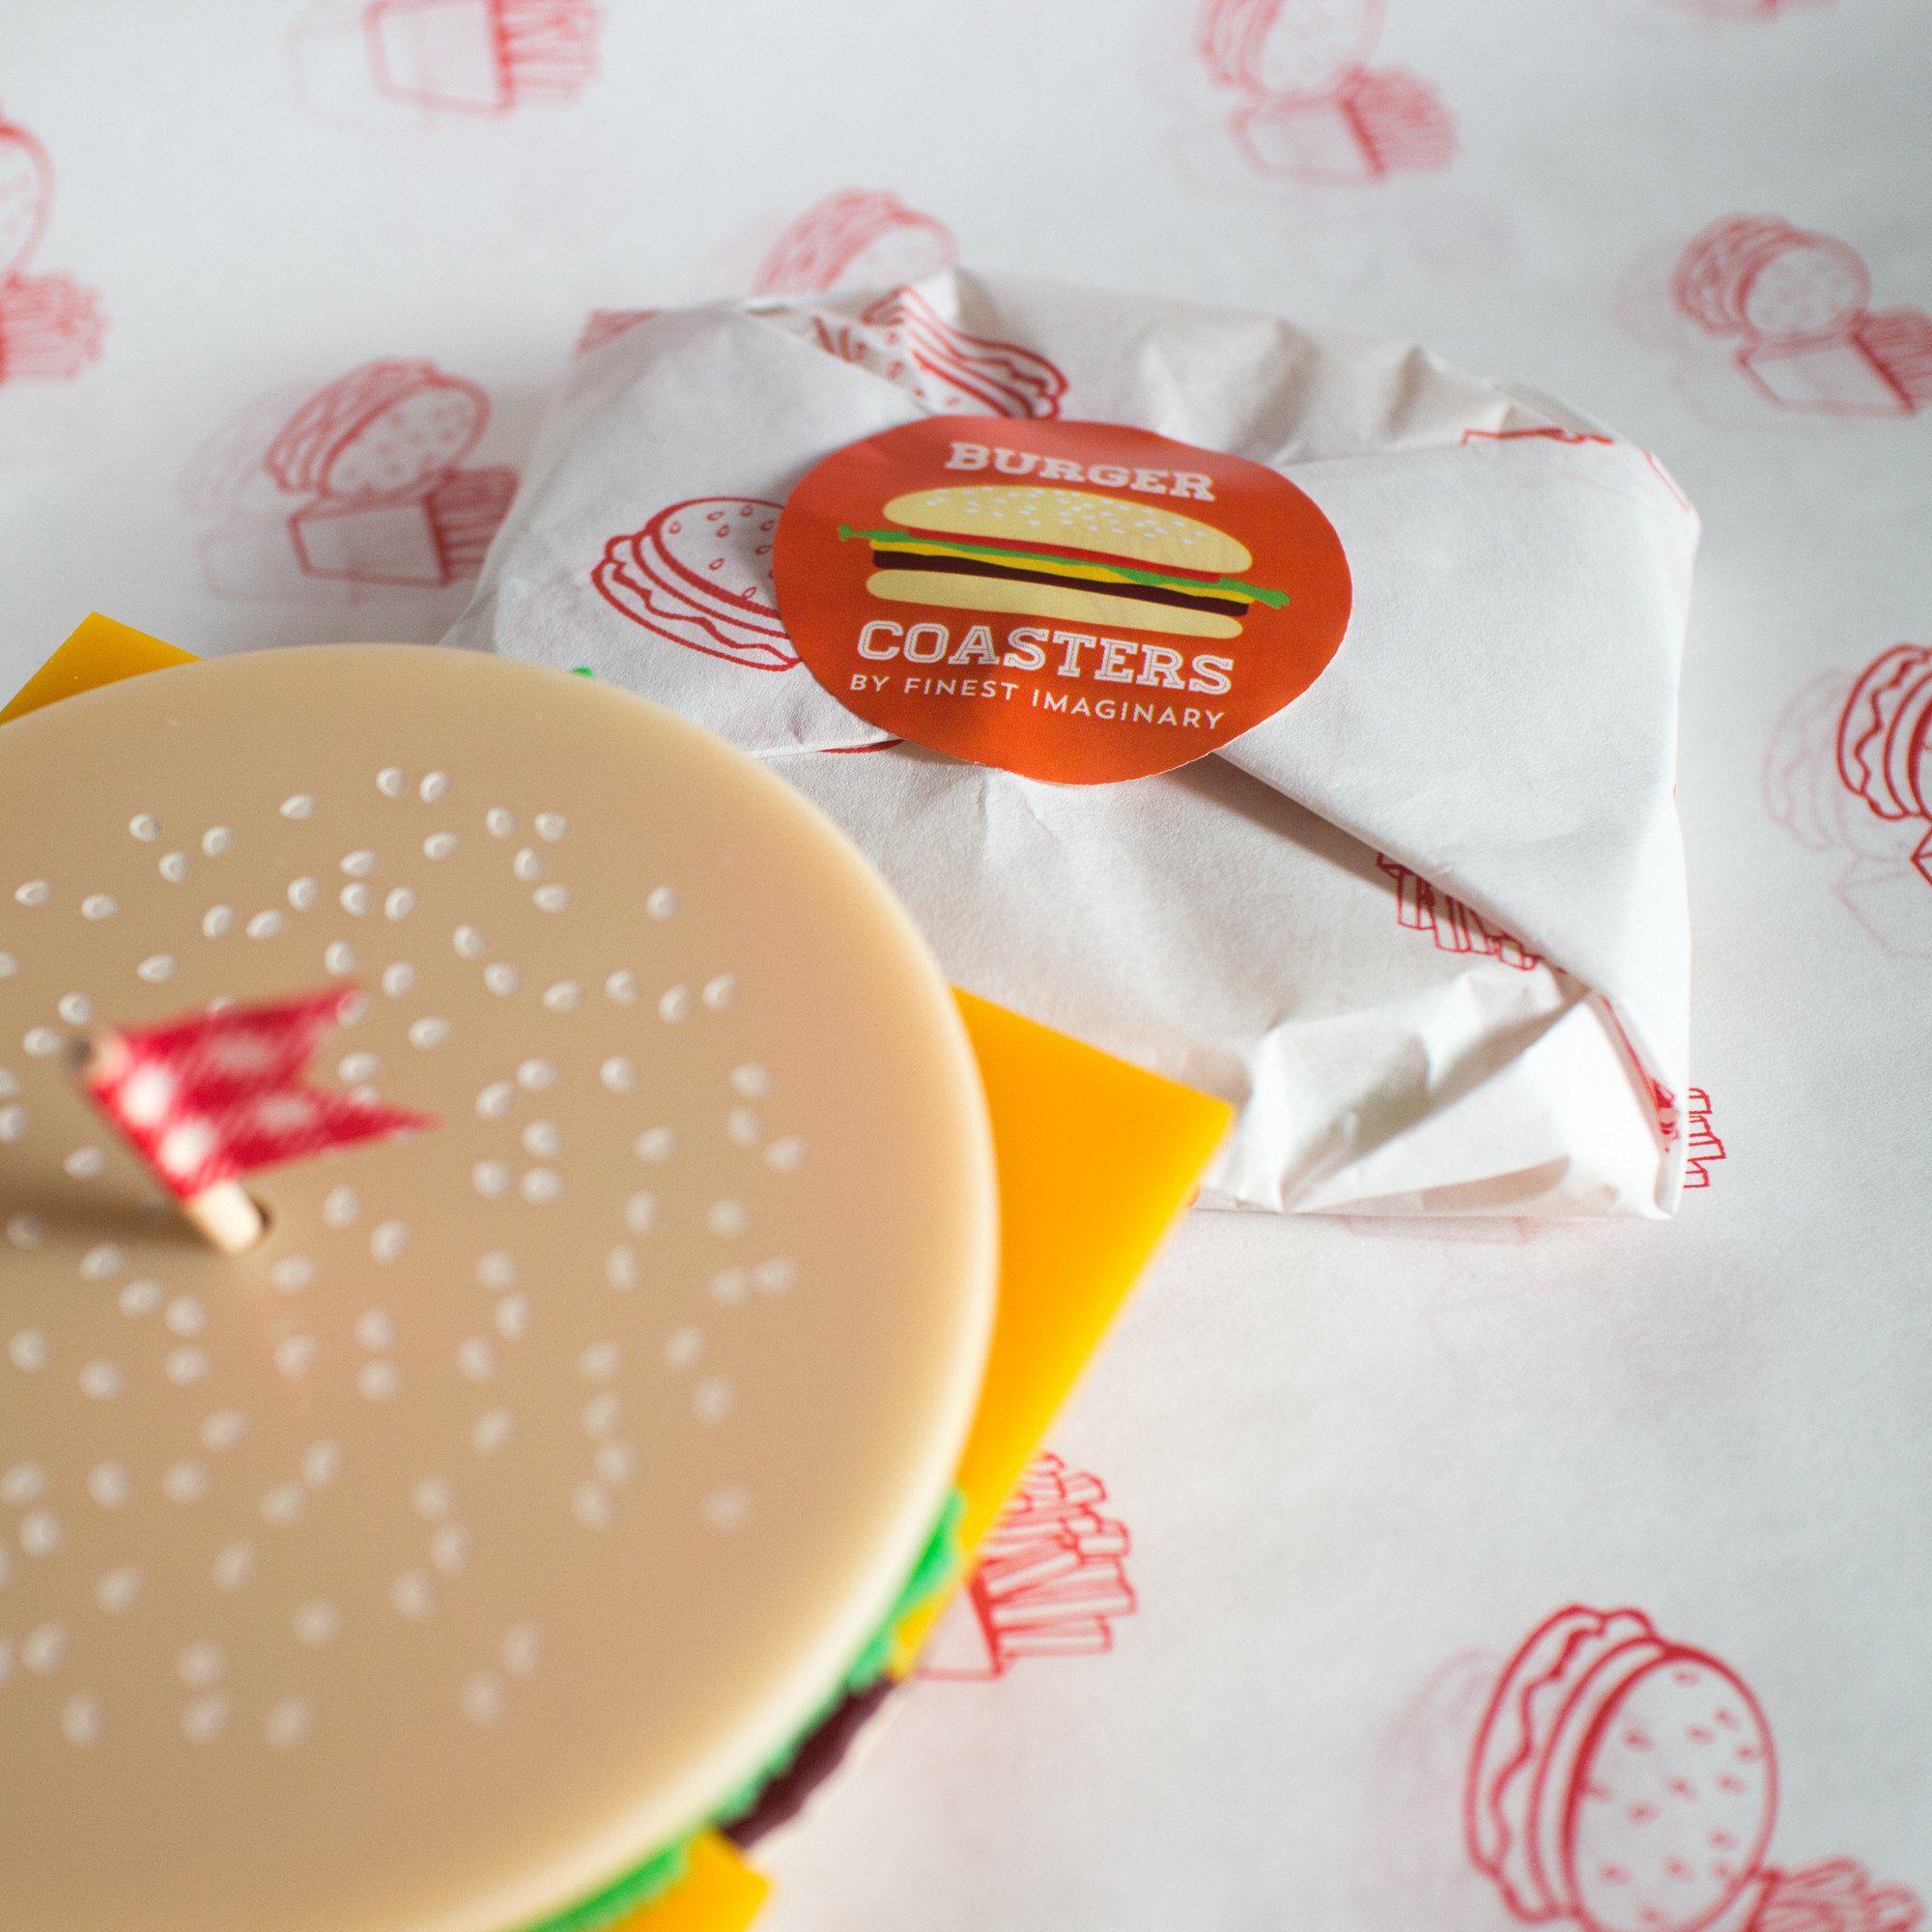 Burger coaster packaging